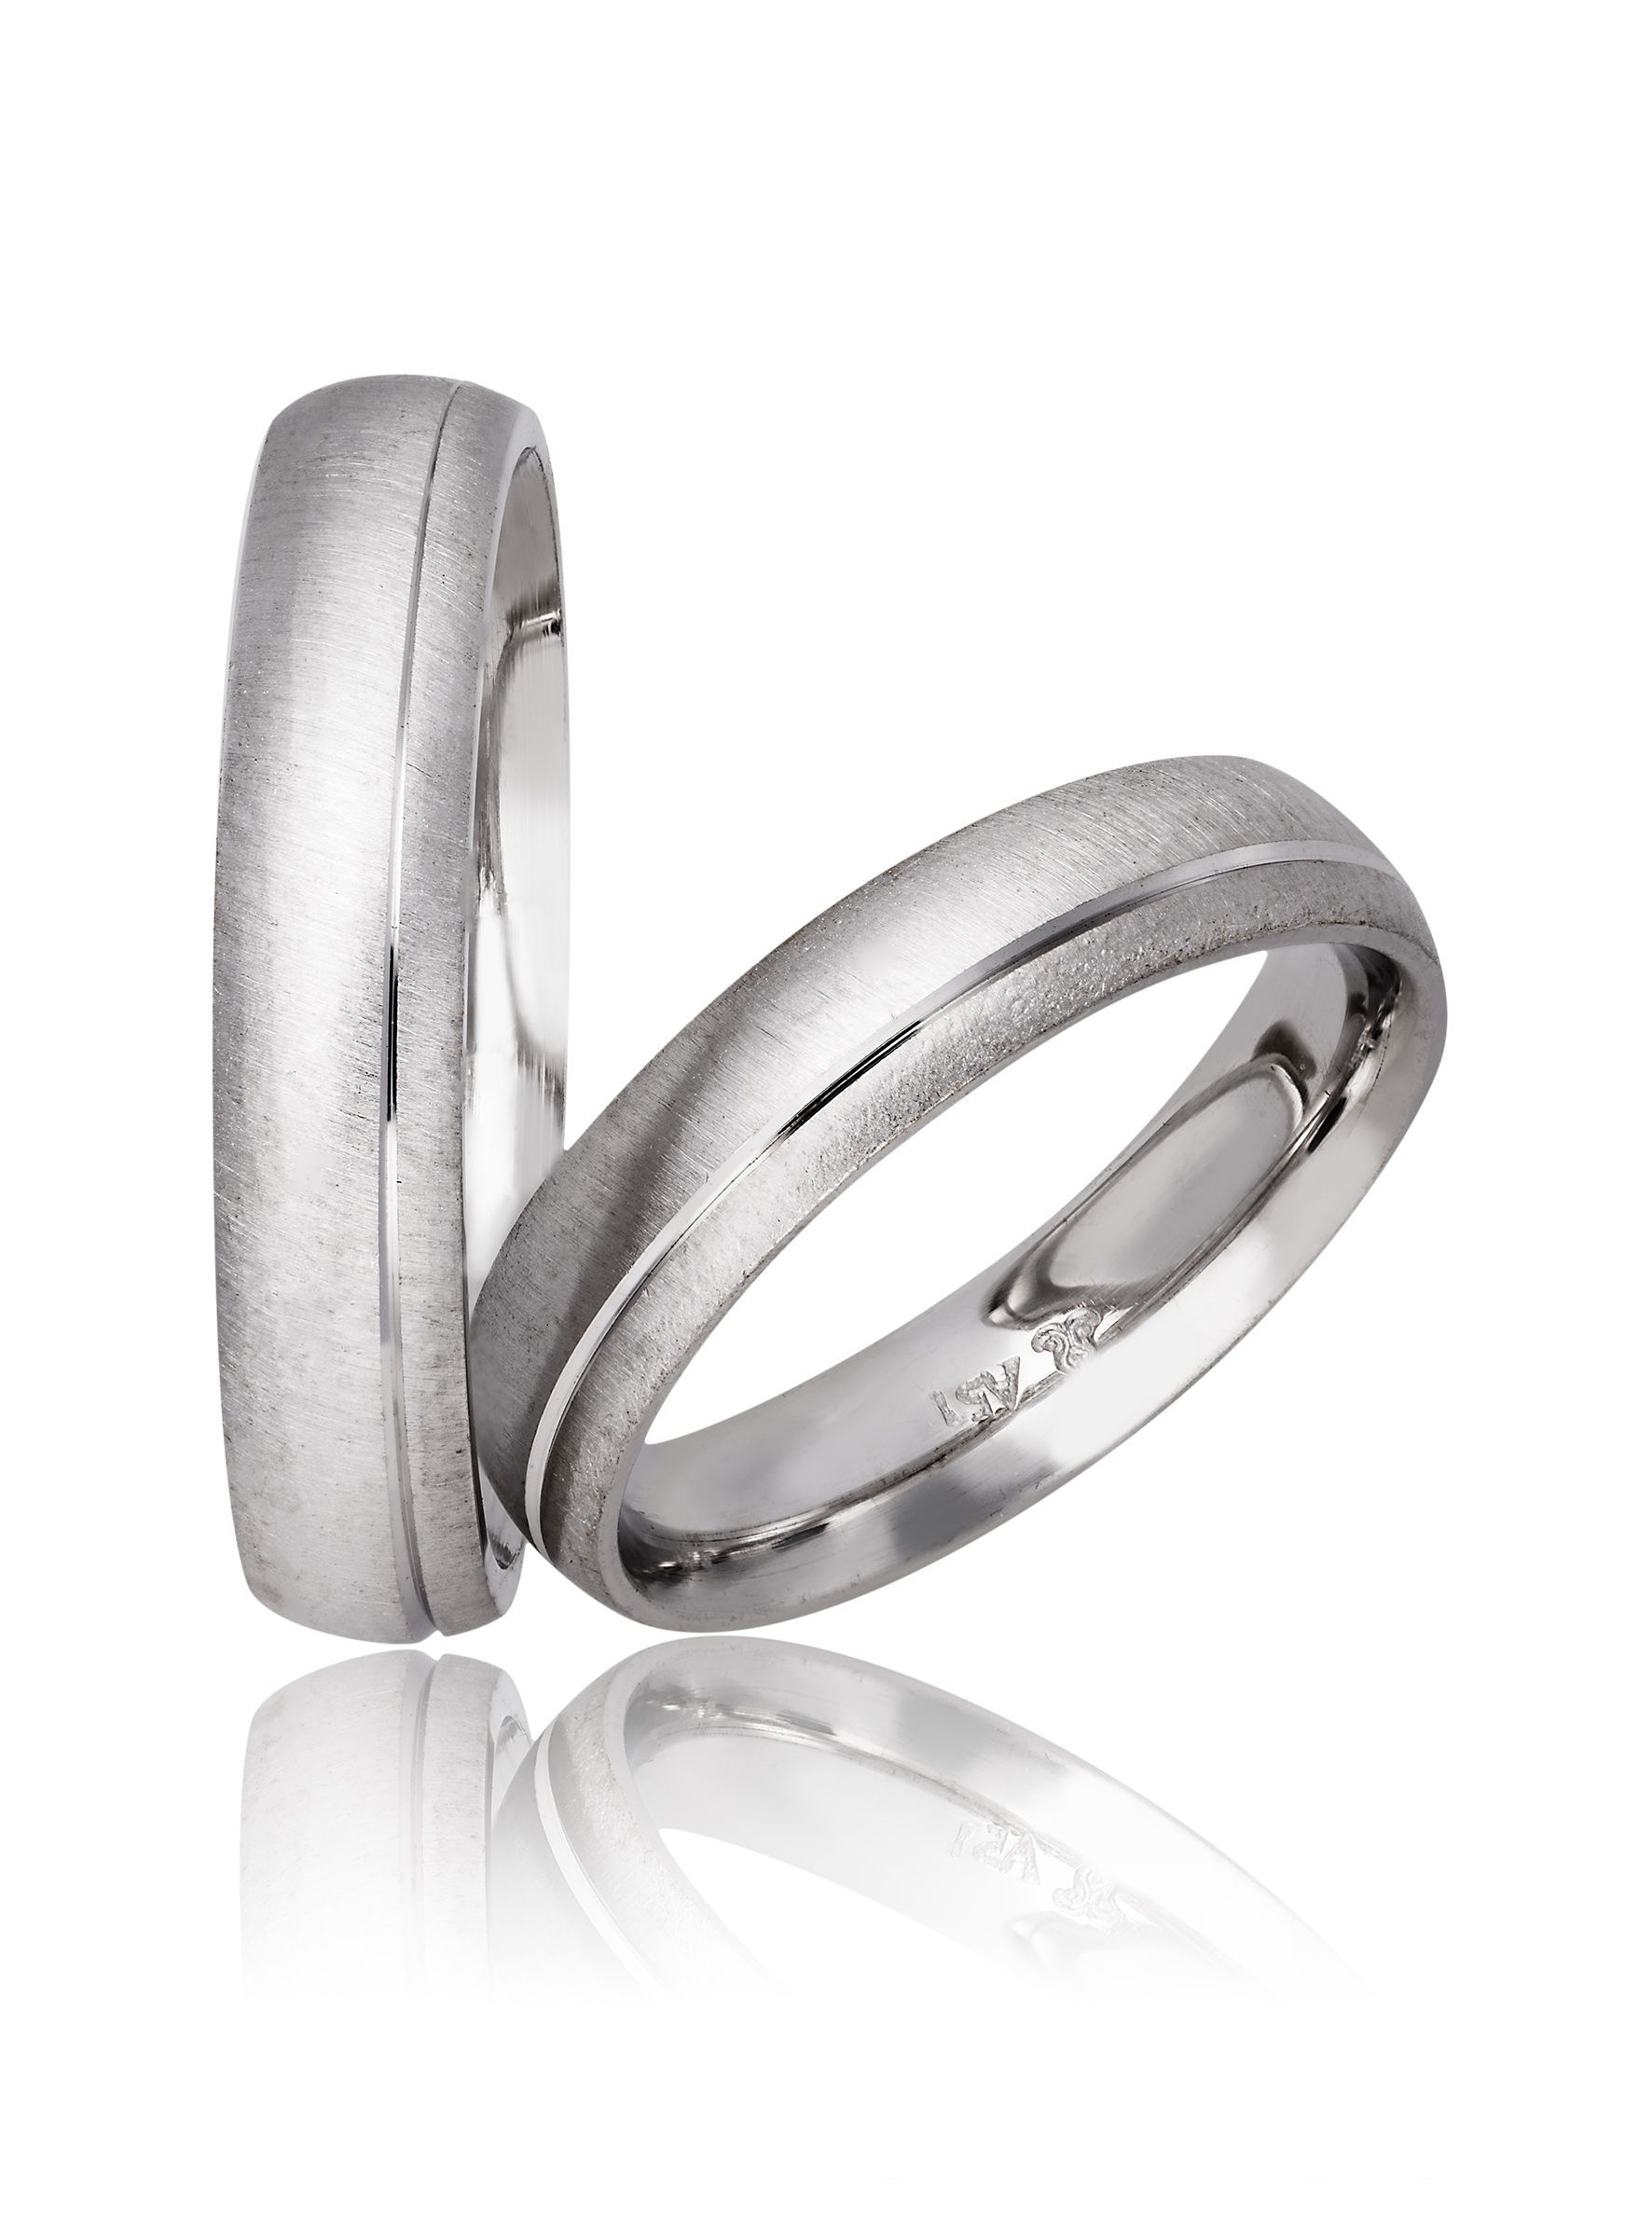 White gold wedding rings 4mm (code 704)